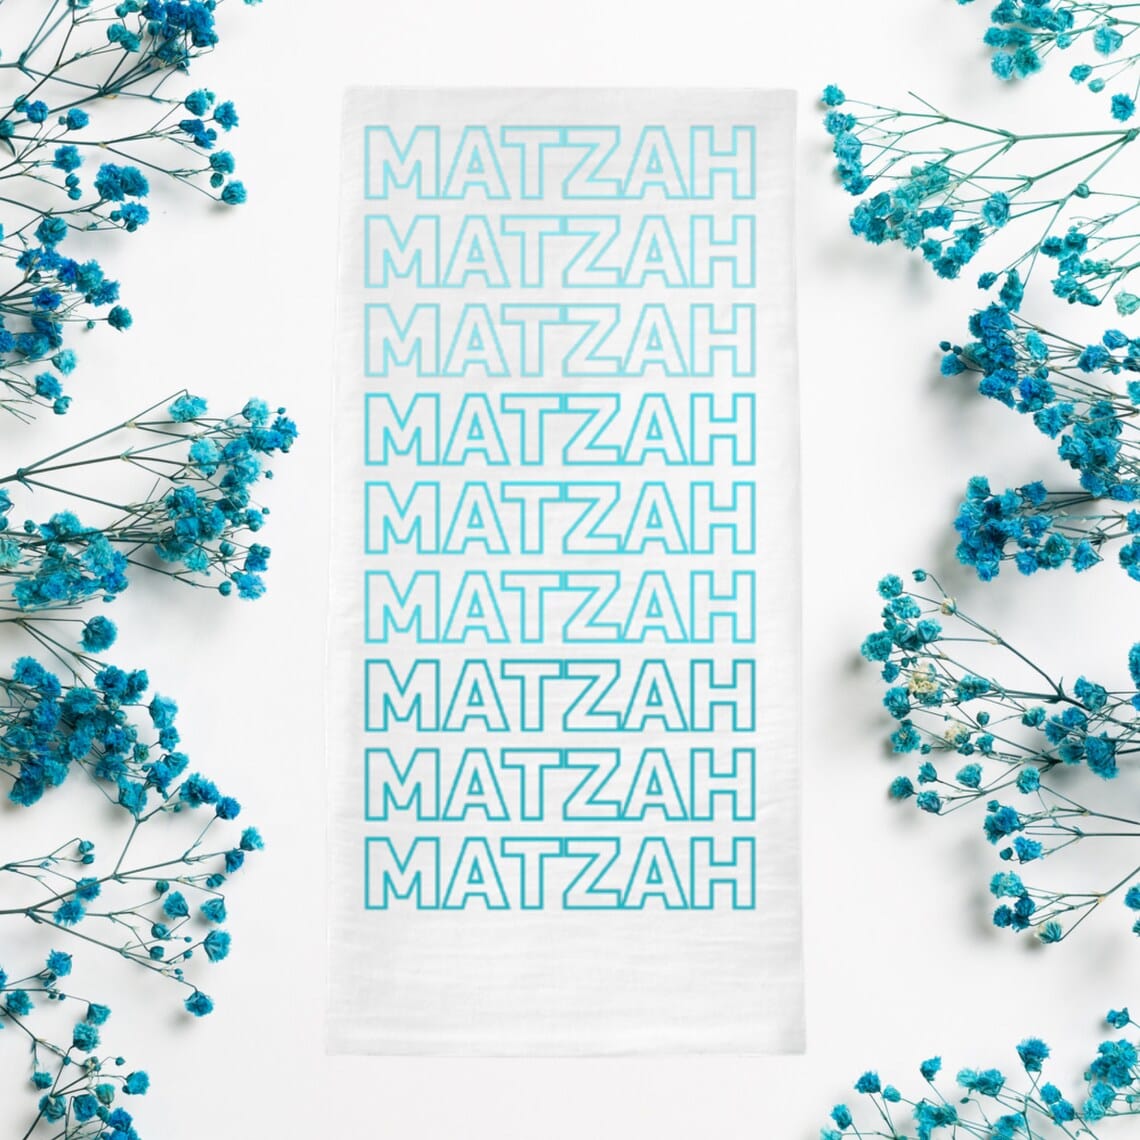 Rin Out Loud Tea Towels "Matzah, Matzah, Matzah" Tea Towel